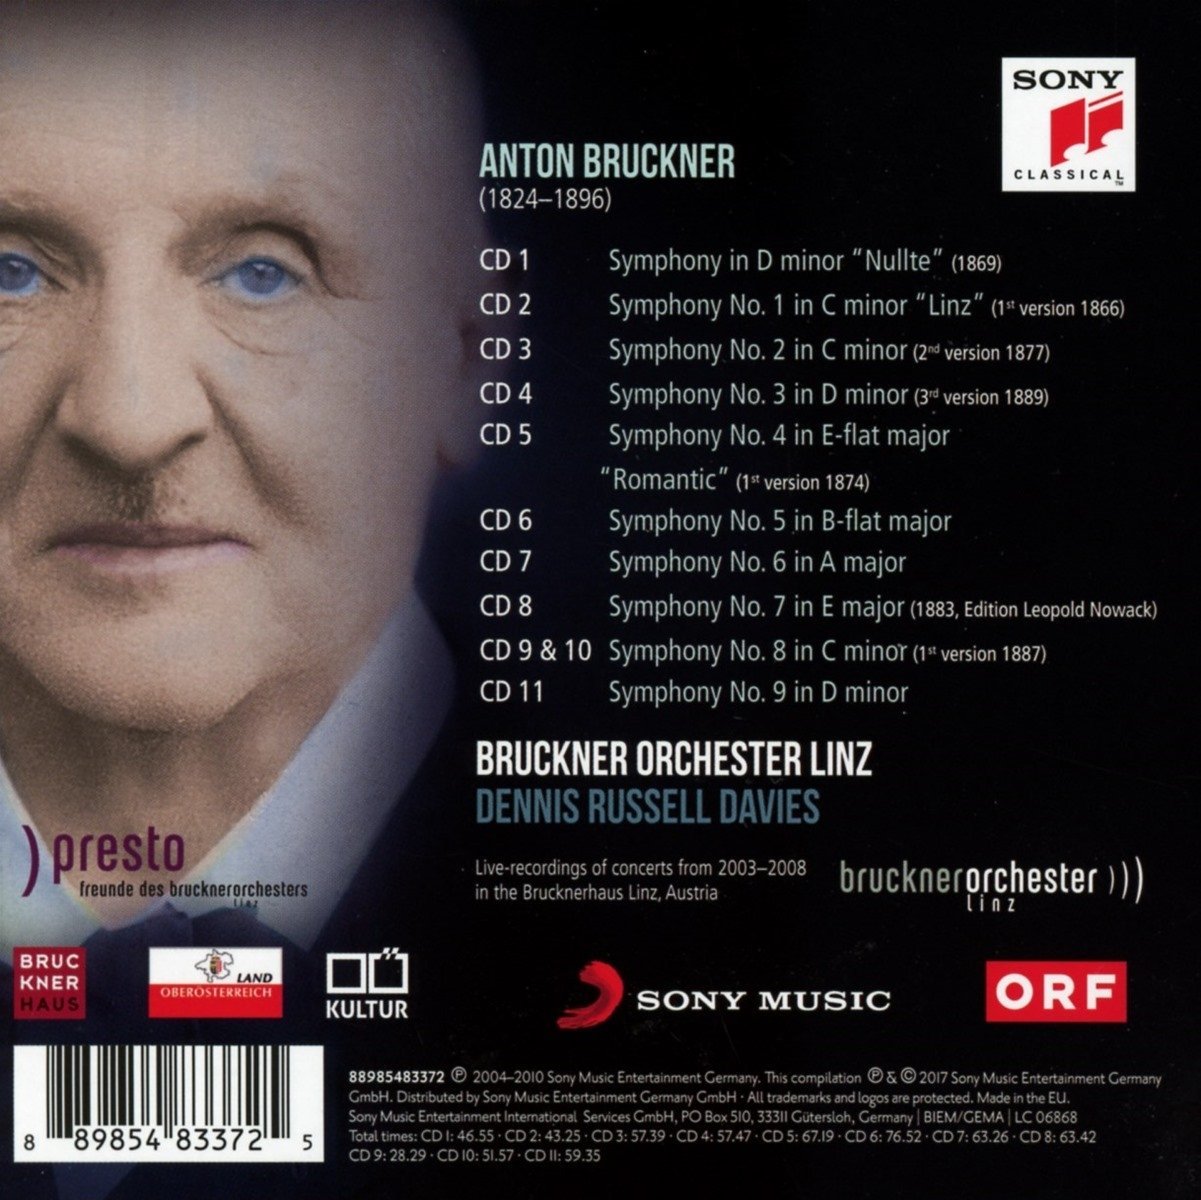 Bruckner Orchester Linz, Dennis Russell Davies - The Complete Bruckner Symphonies (2017)